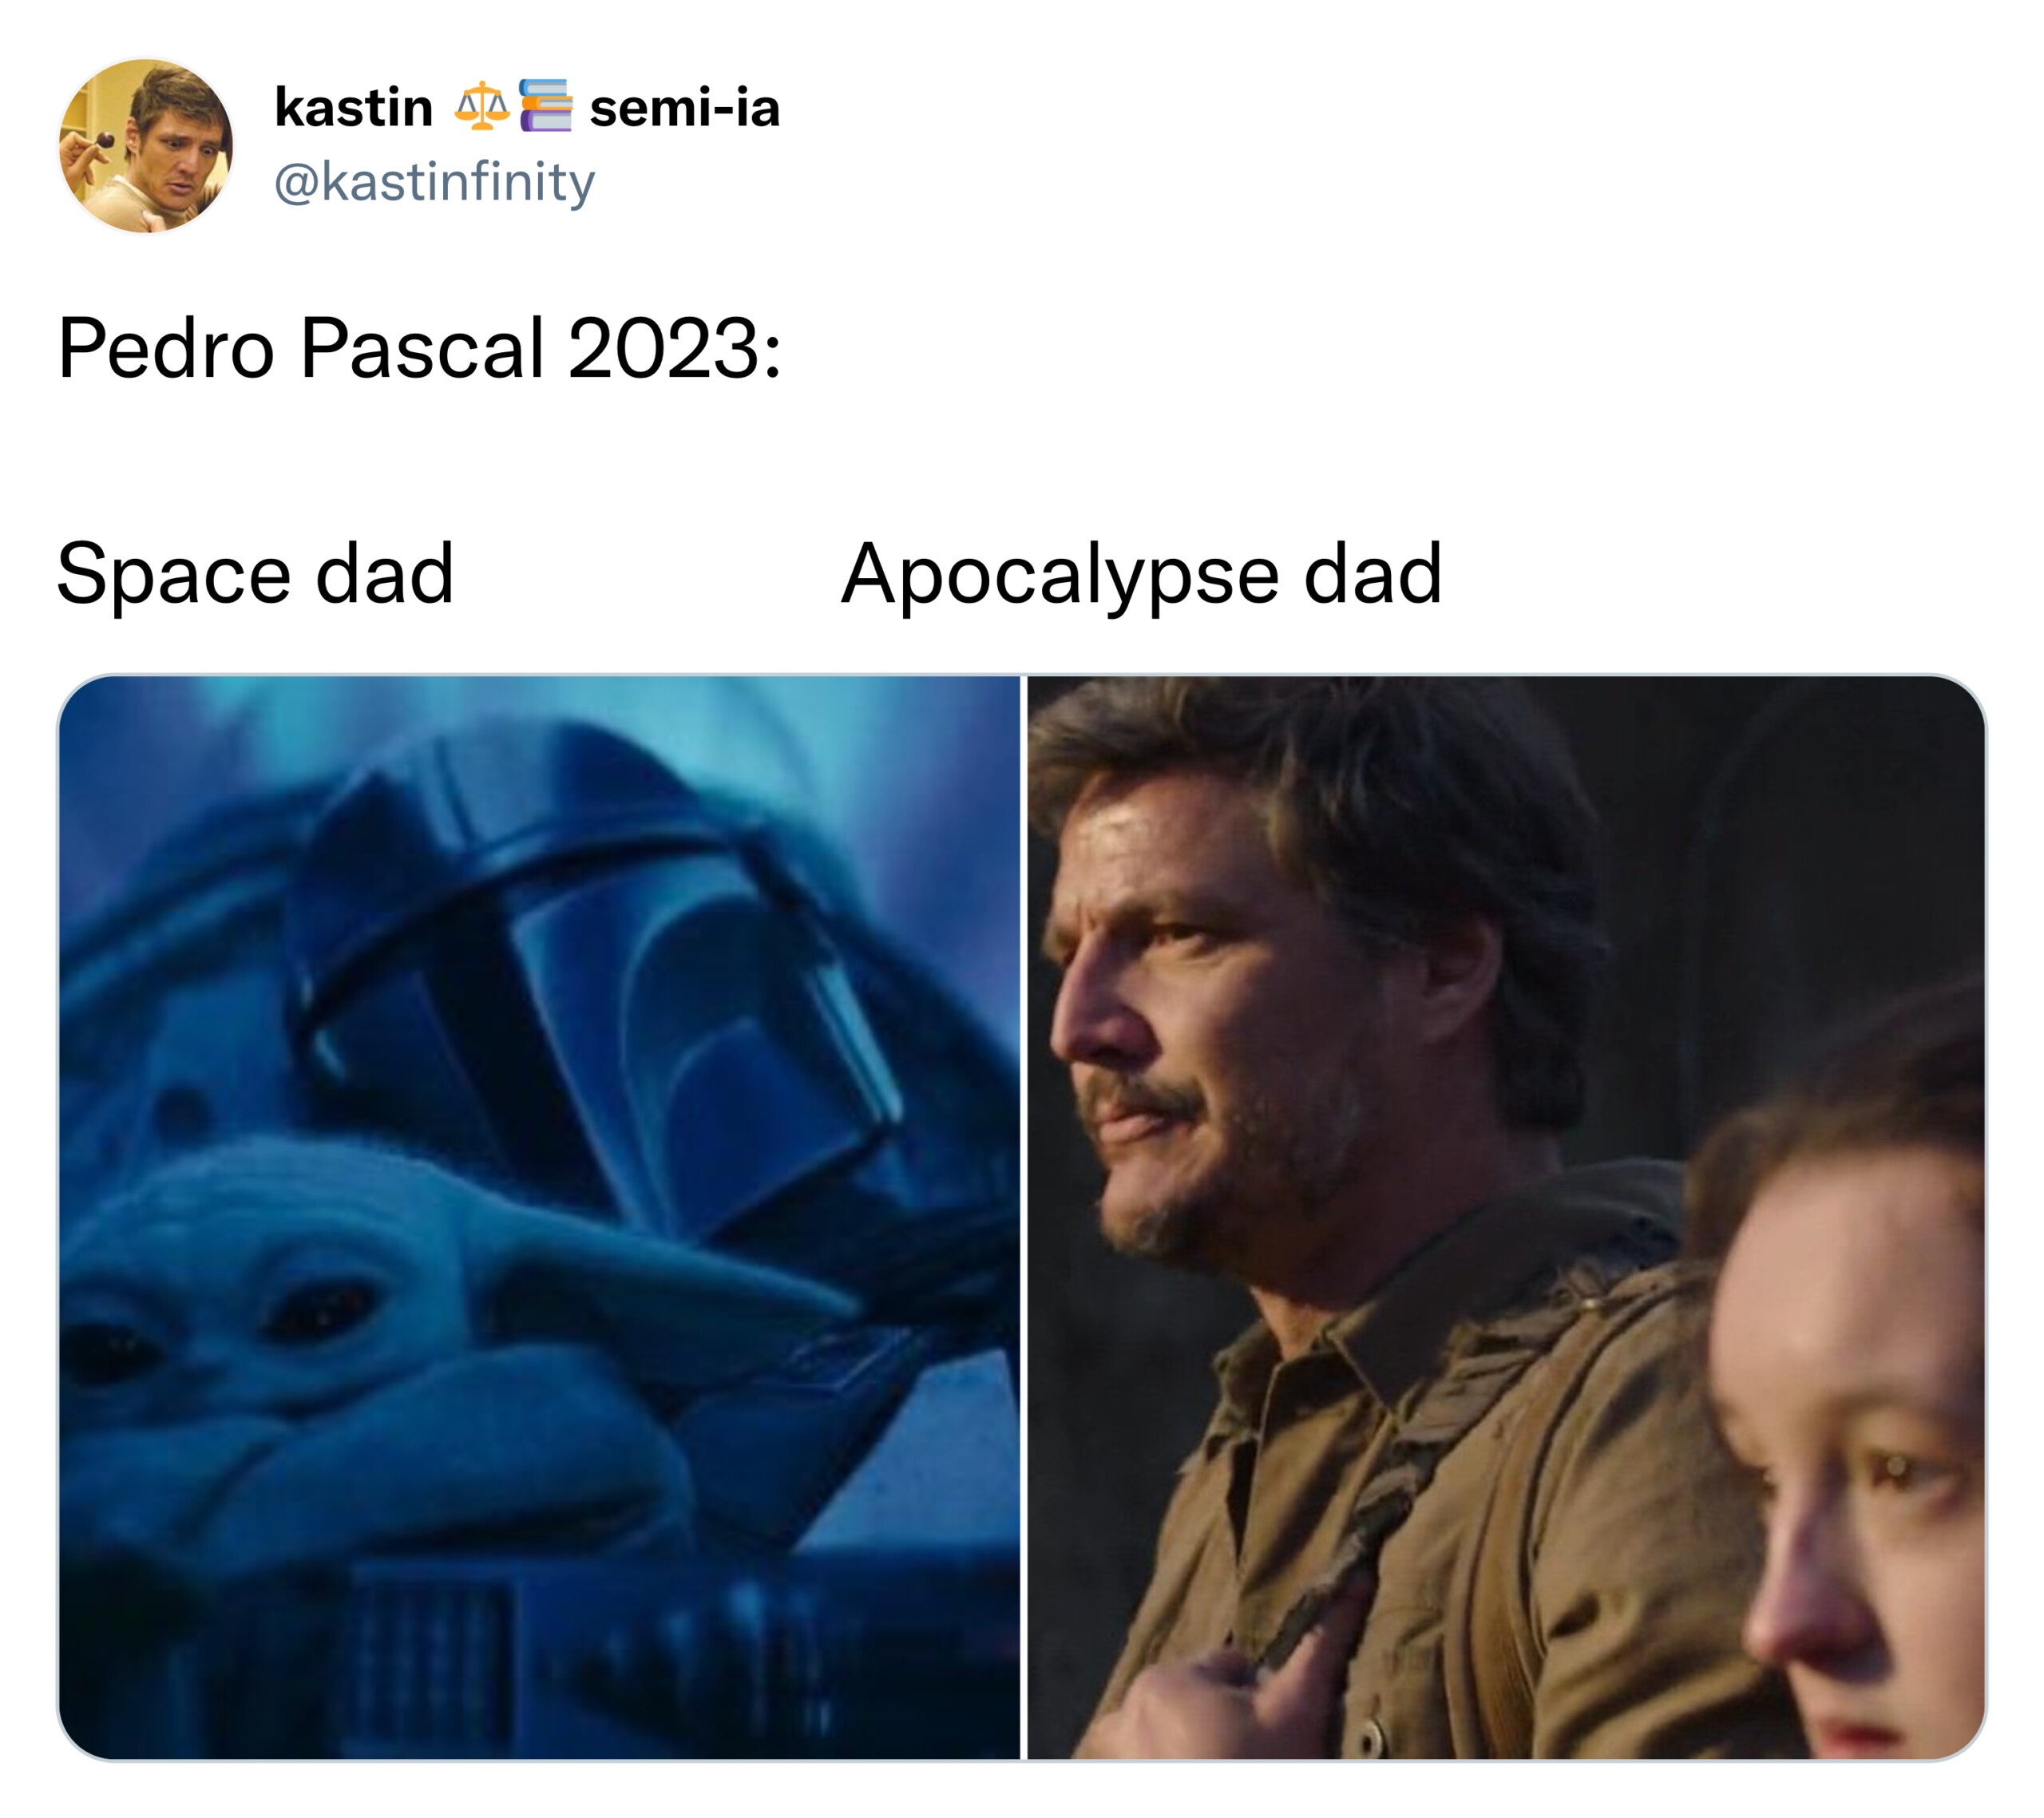 pedro pascal meme - space dad